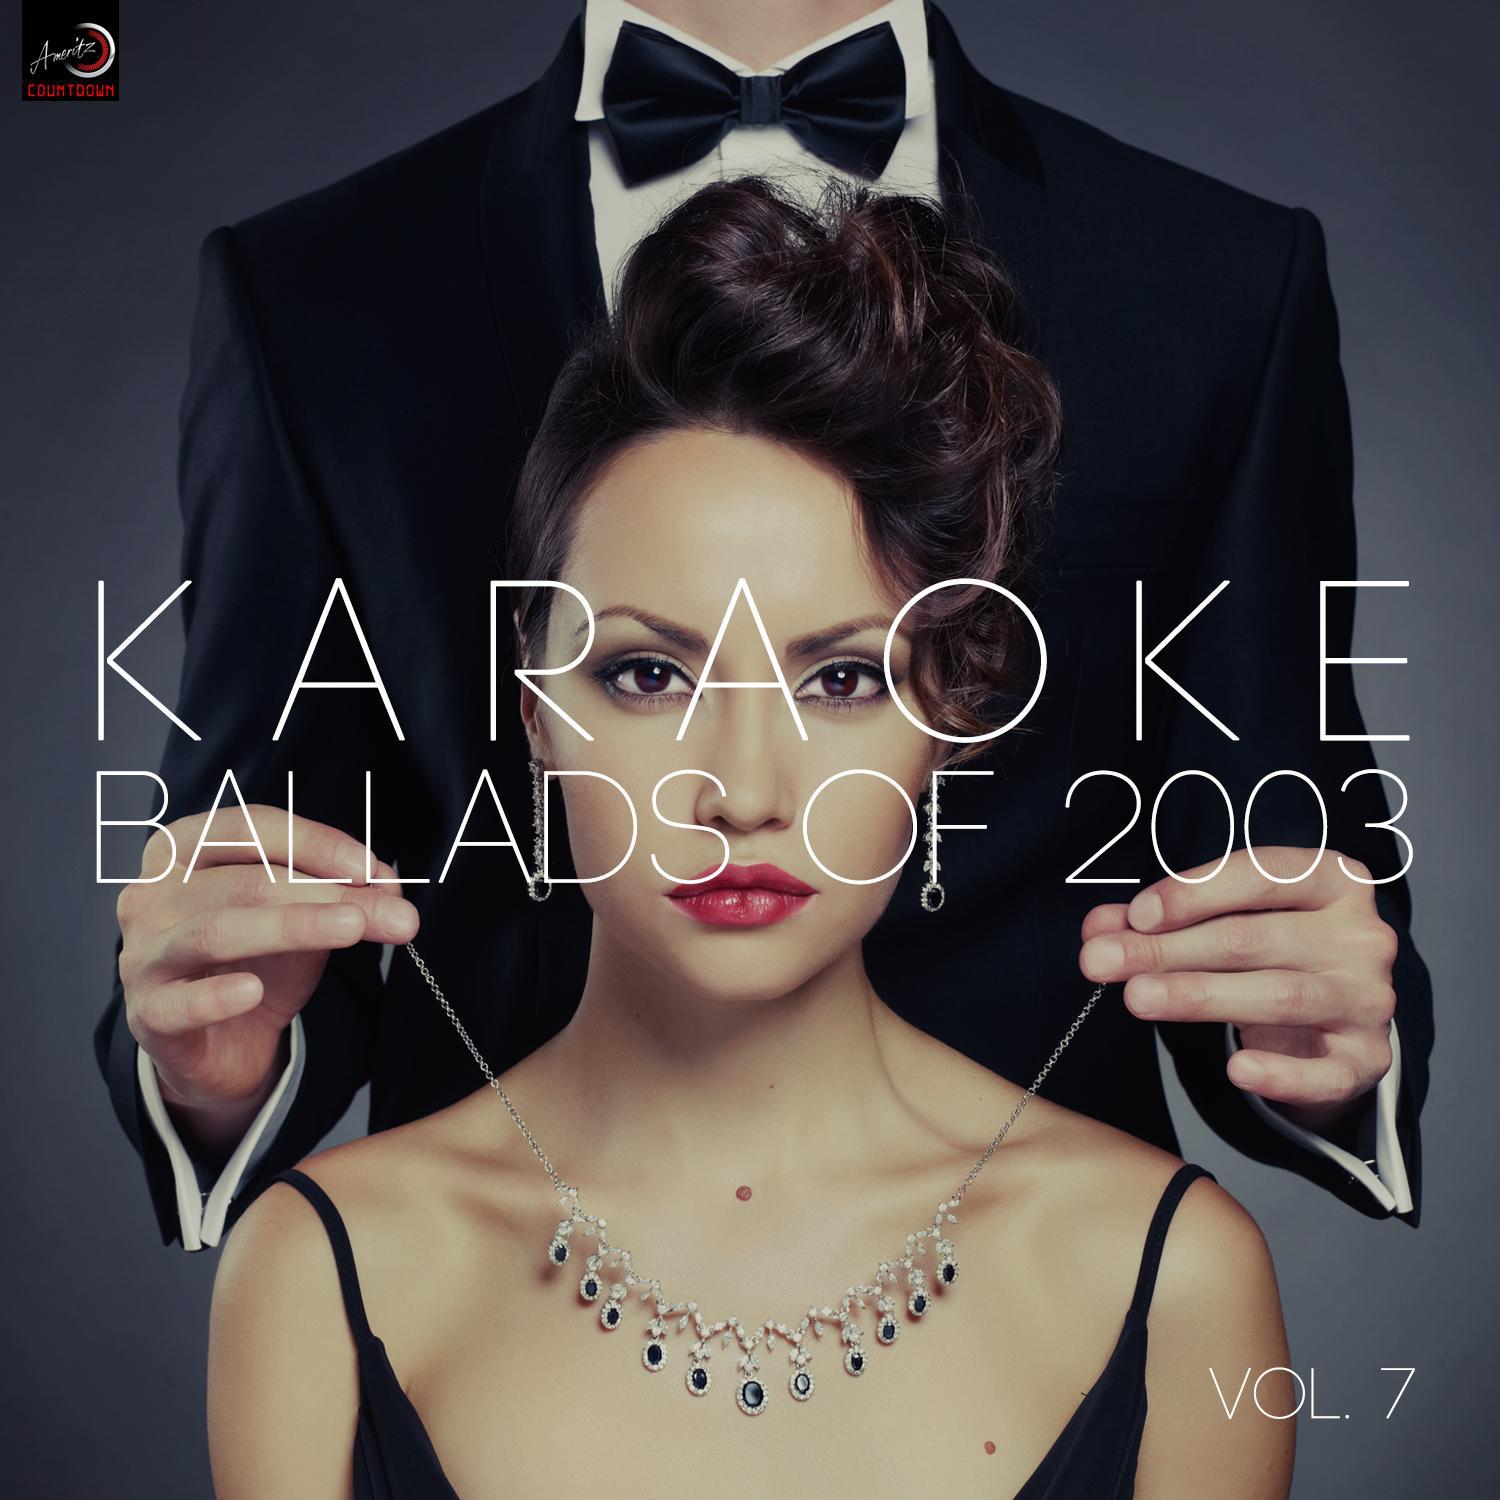 Karaoke - Ballads of 2003, Vol. 7